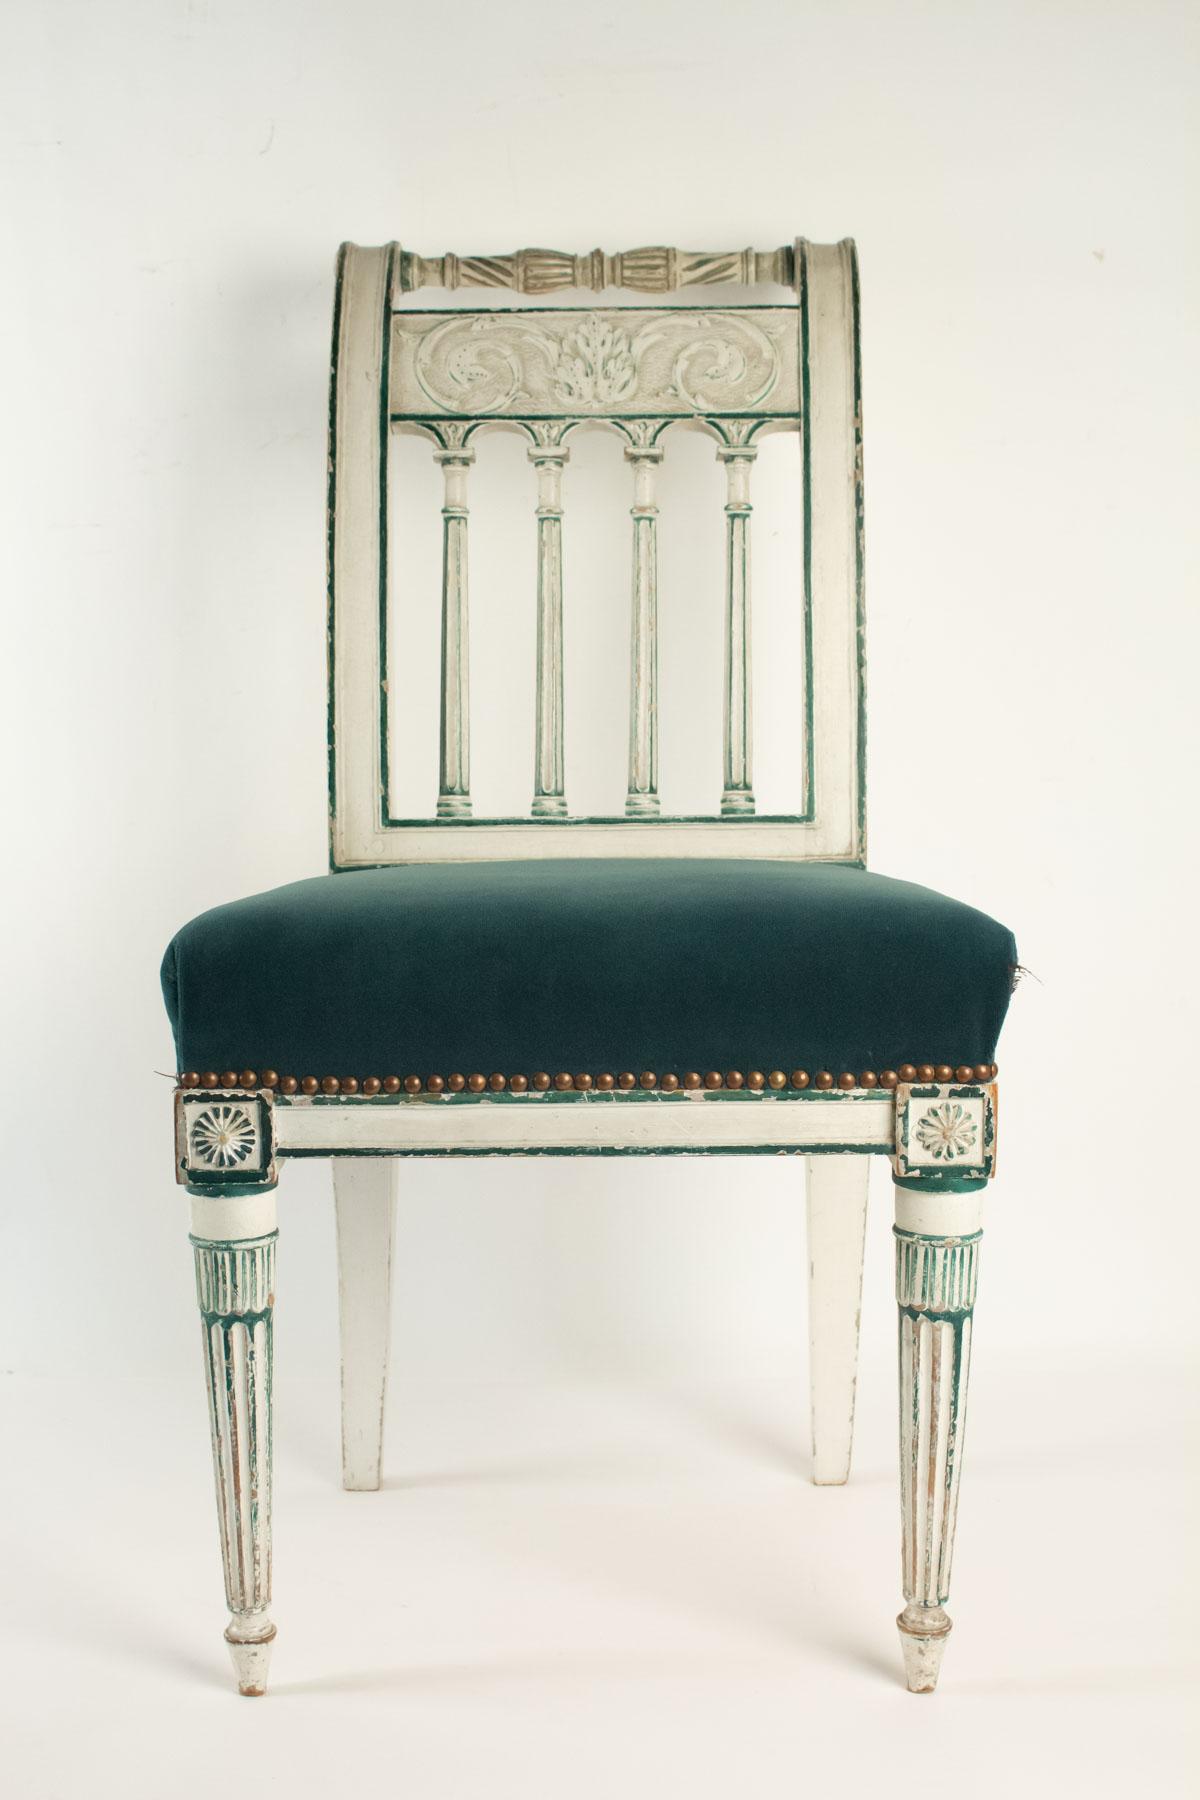 Set of 6 chairs Directoire period, 19th century. Measures: H 87cm, W 45cm, W 58cm.